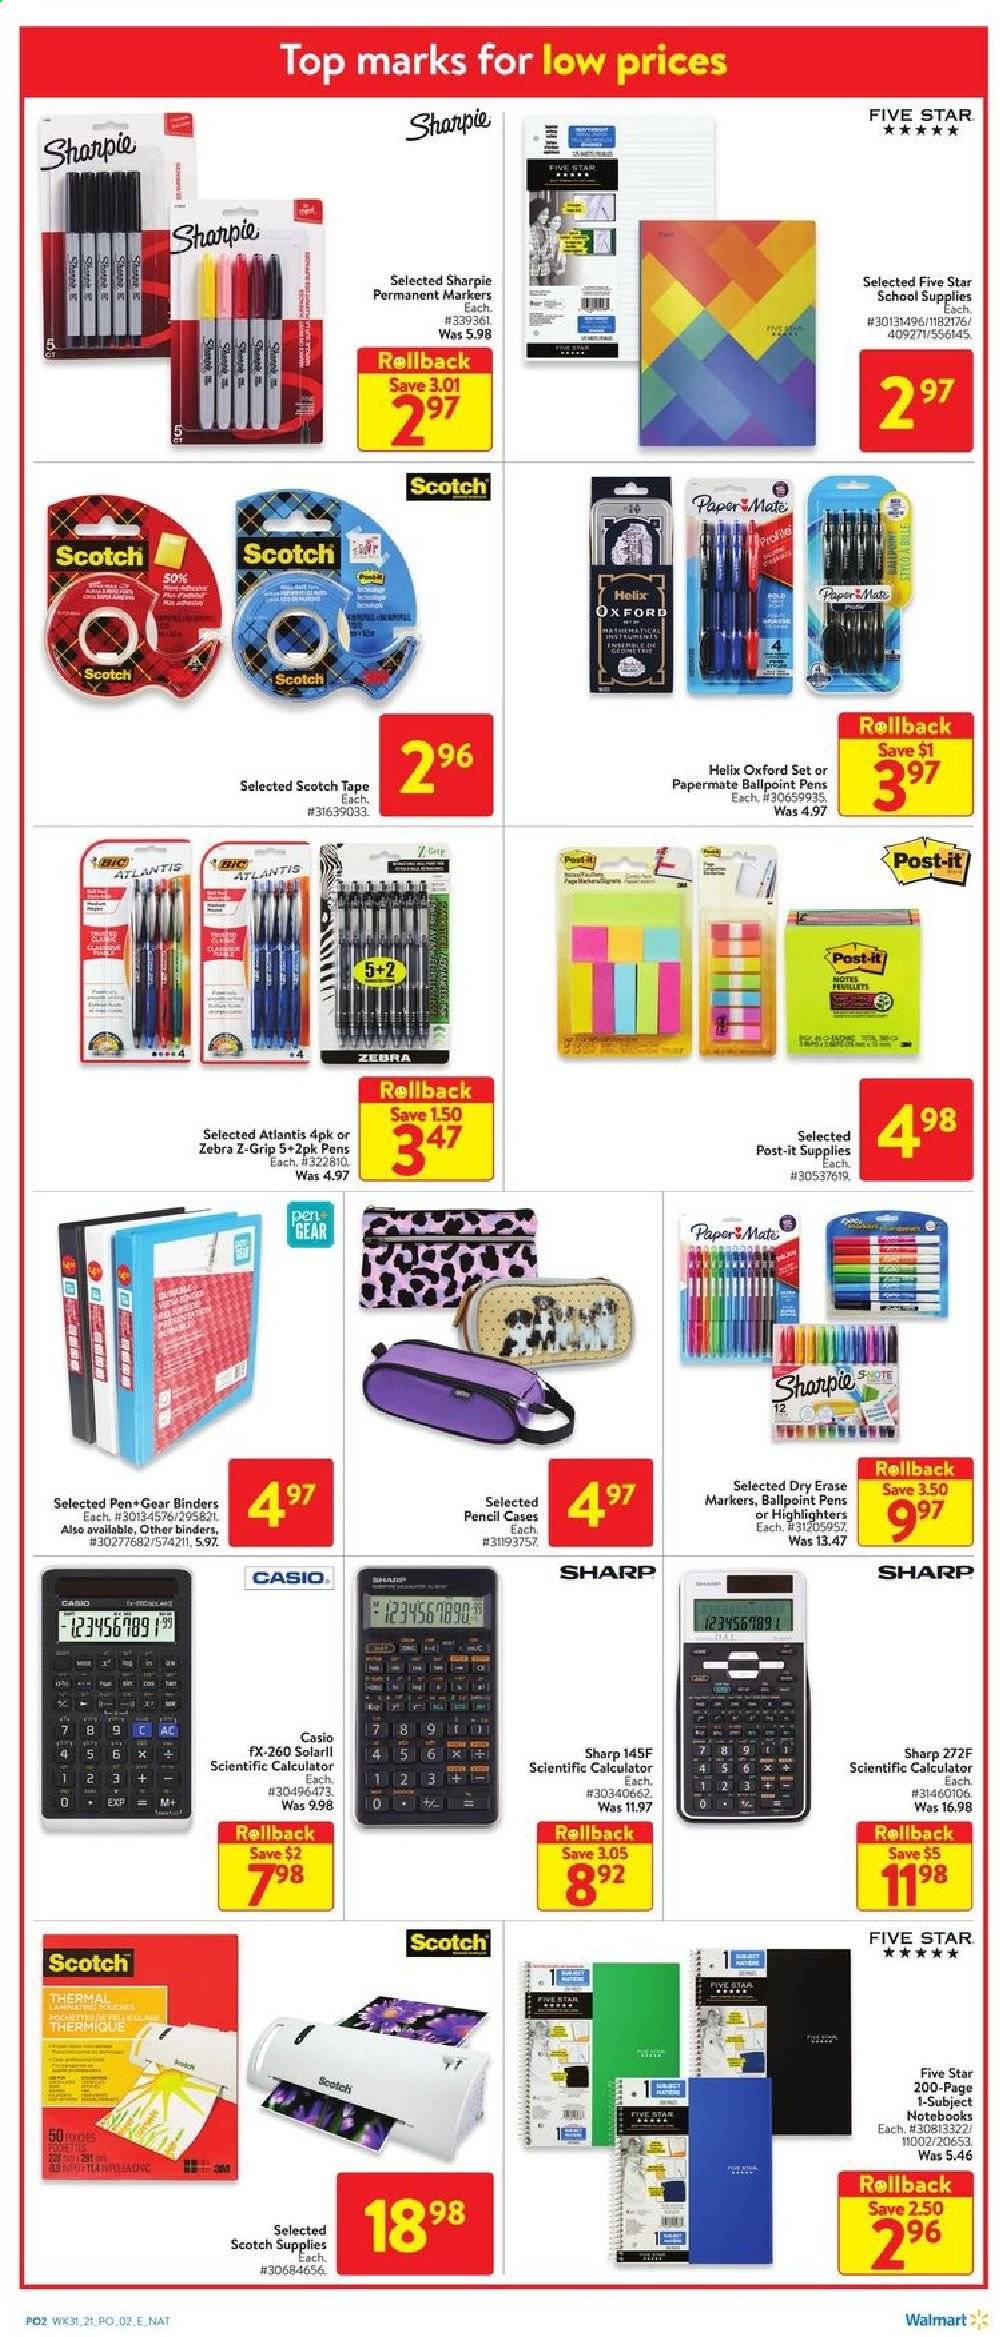 thumbnail - Circulaire Walmart - 26 Août 2021 - 01 Septembre 2021 - Produits soldés - Sharp, highlighter, stylo, Post-it, Casio. Page 2.